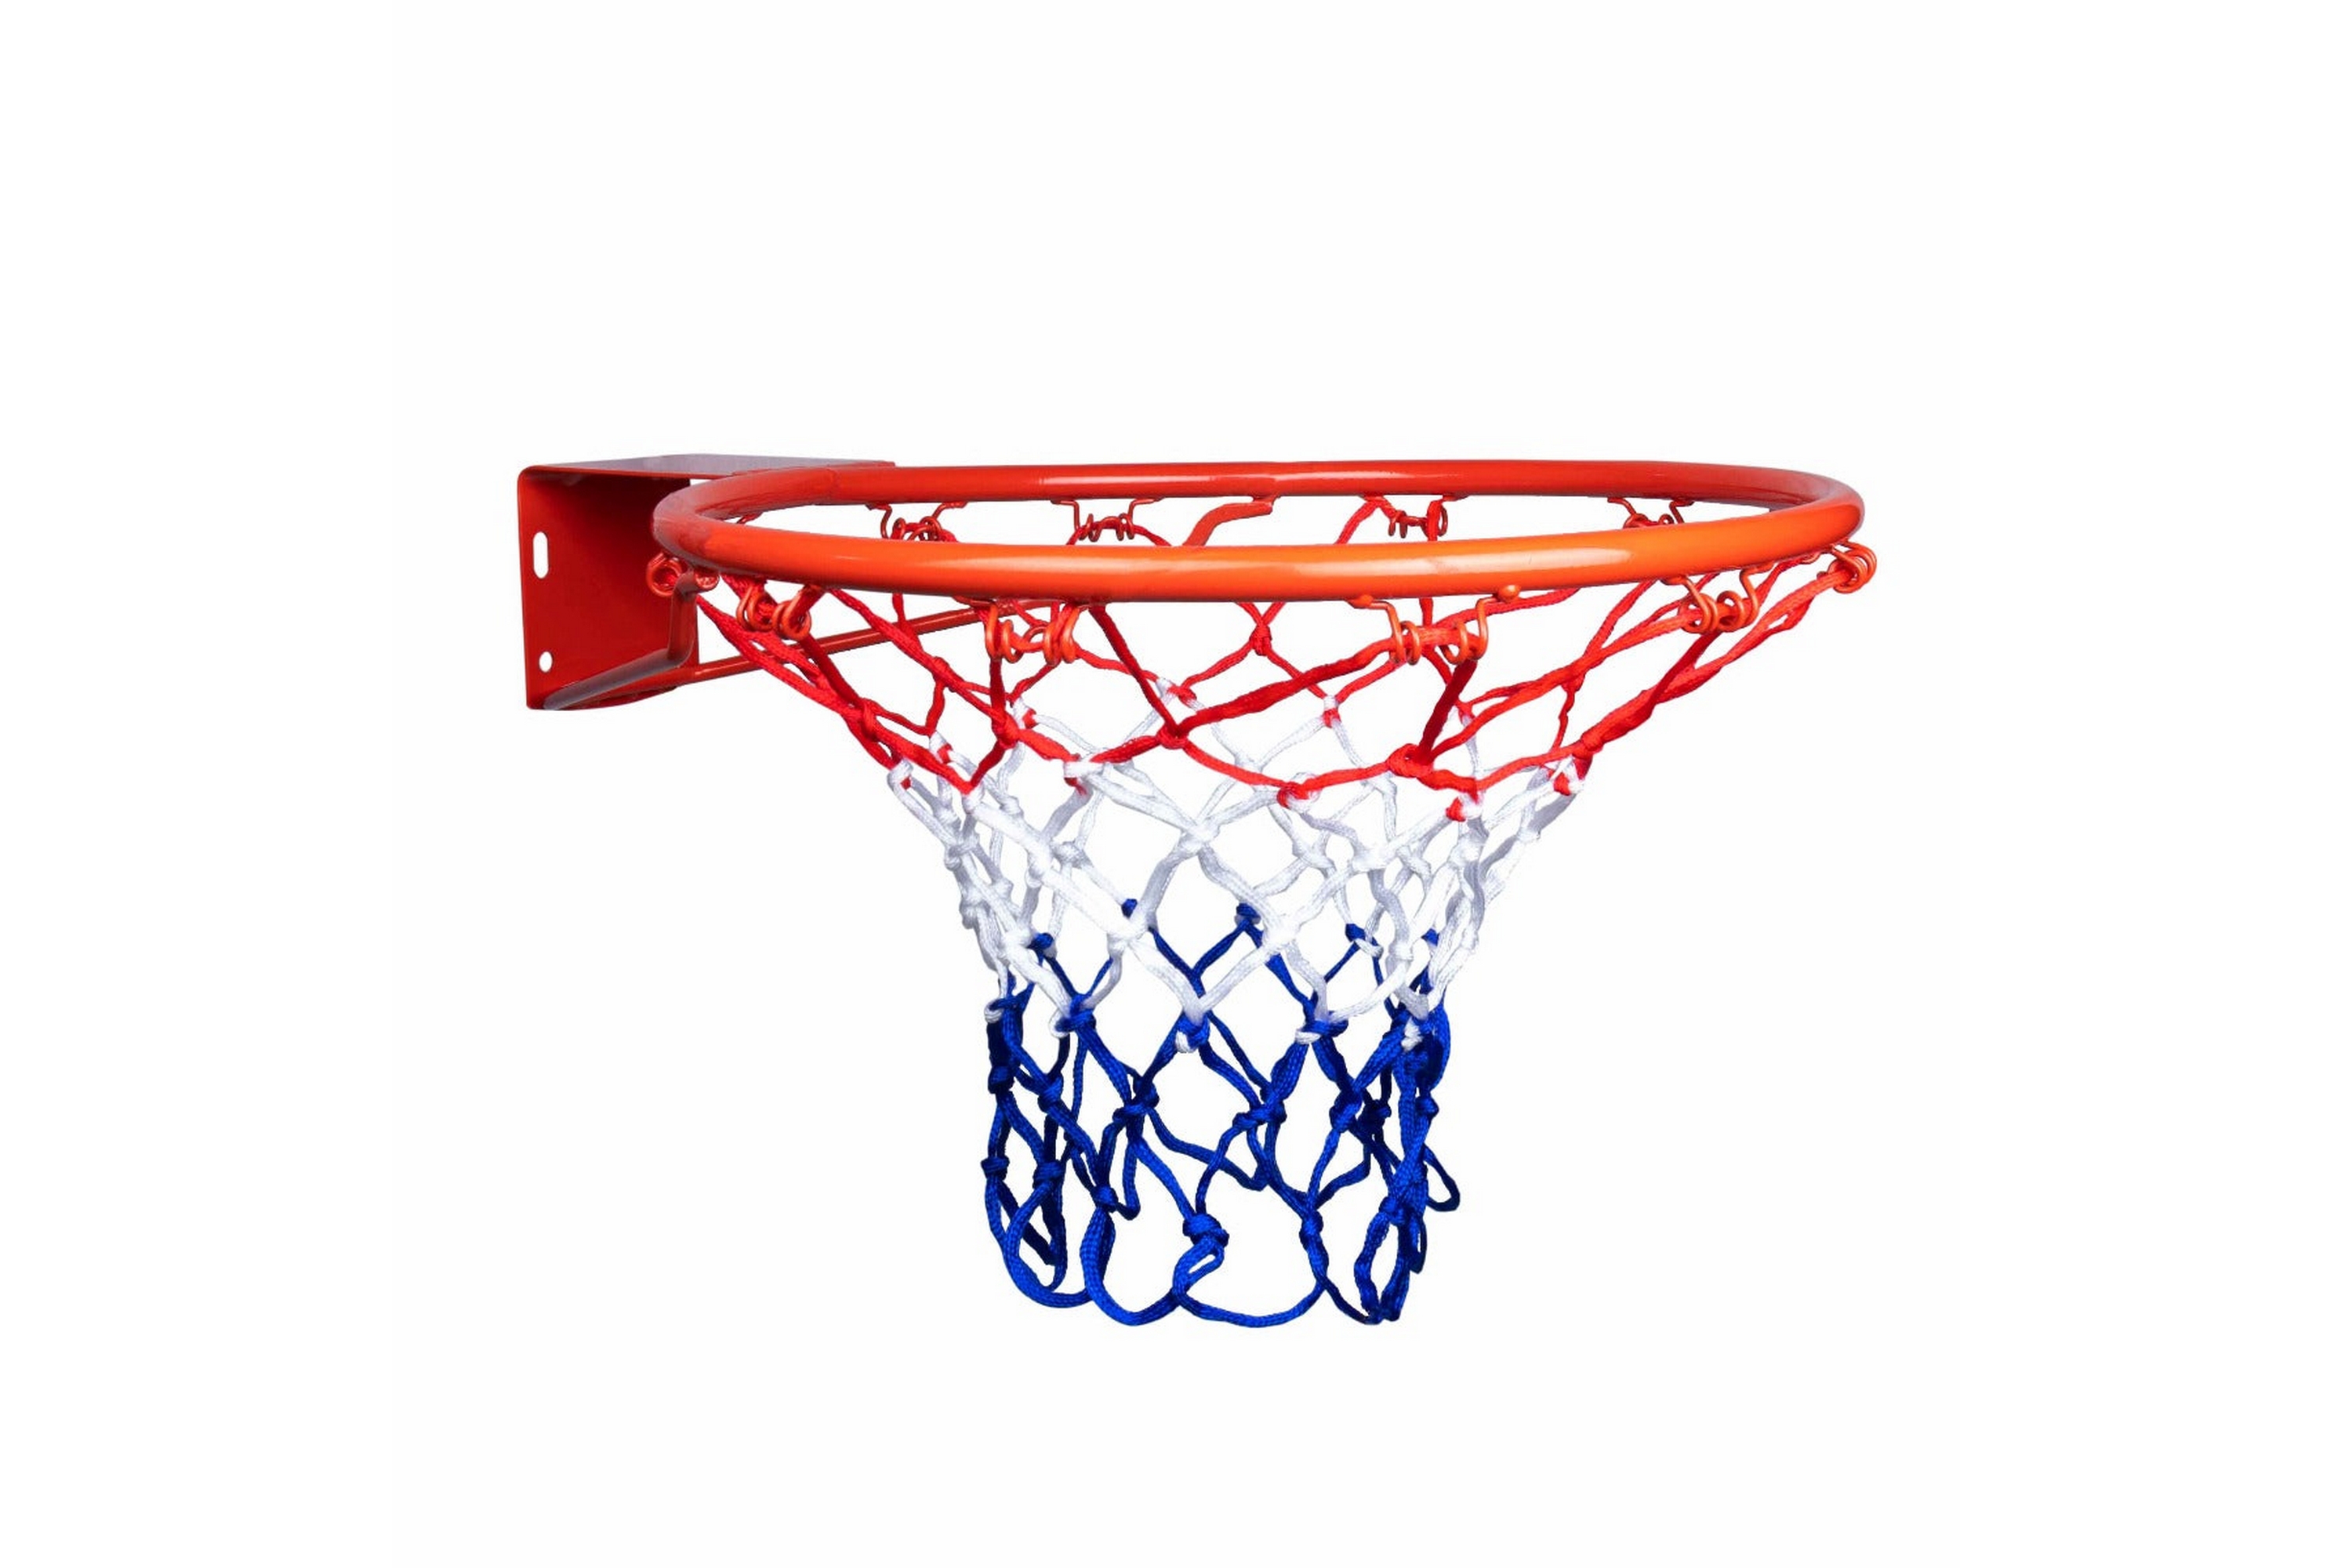 Prosport Basketkorg - Röd 6420613982229